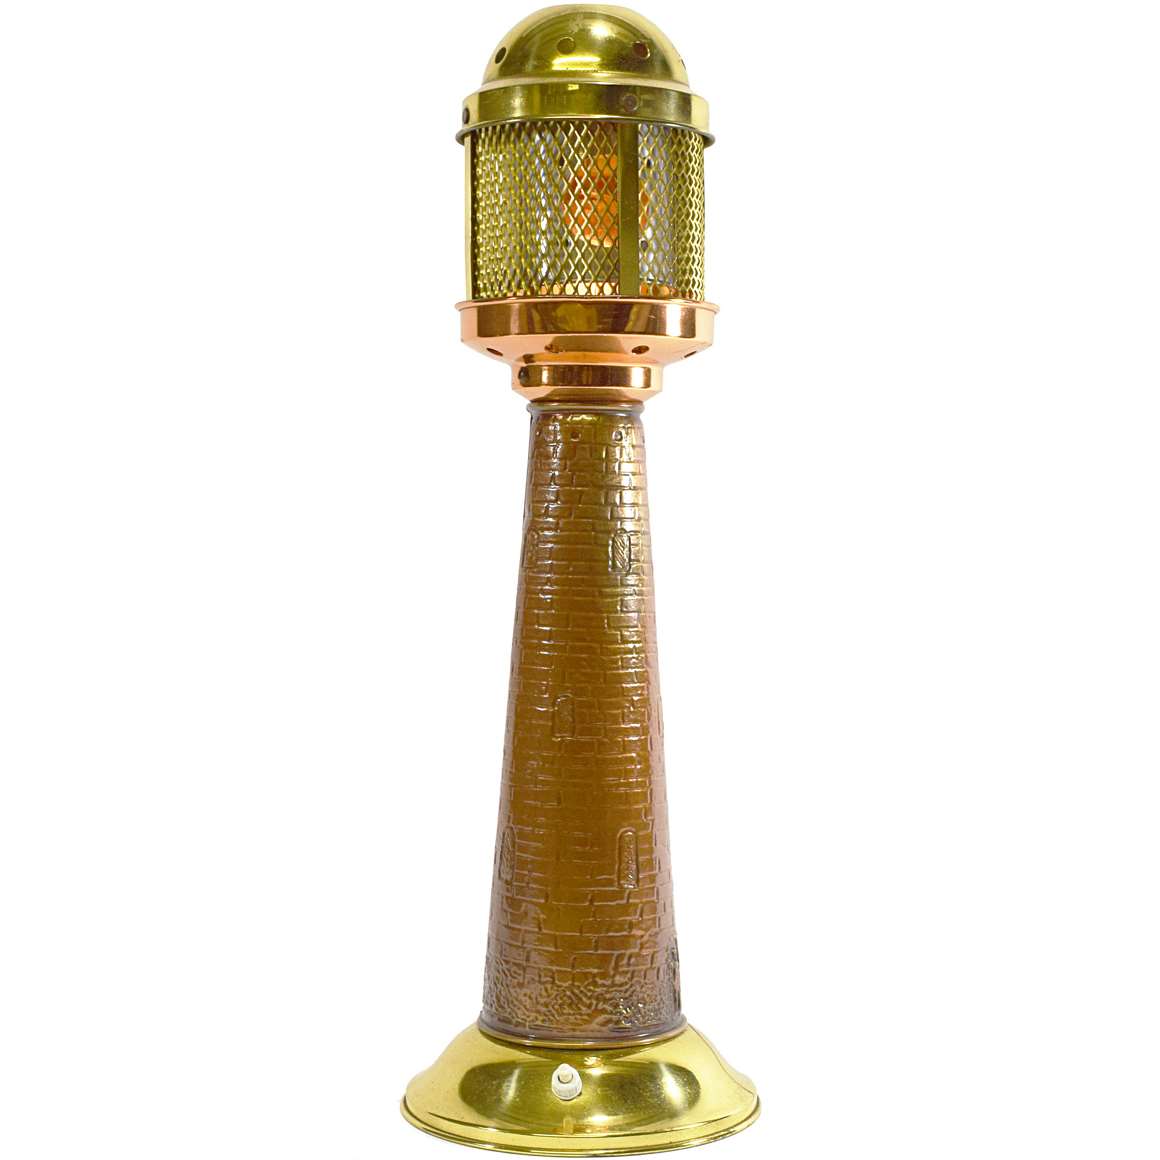 Lighthouse Table Lamp Vintageinfo, Lighthouse Bedside Table Lamp